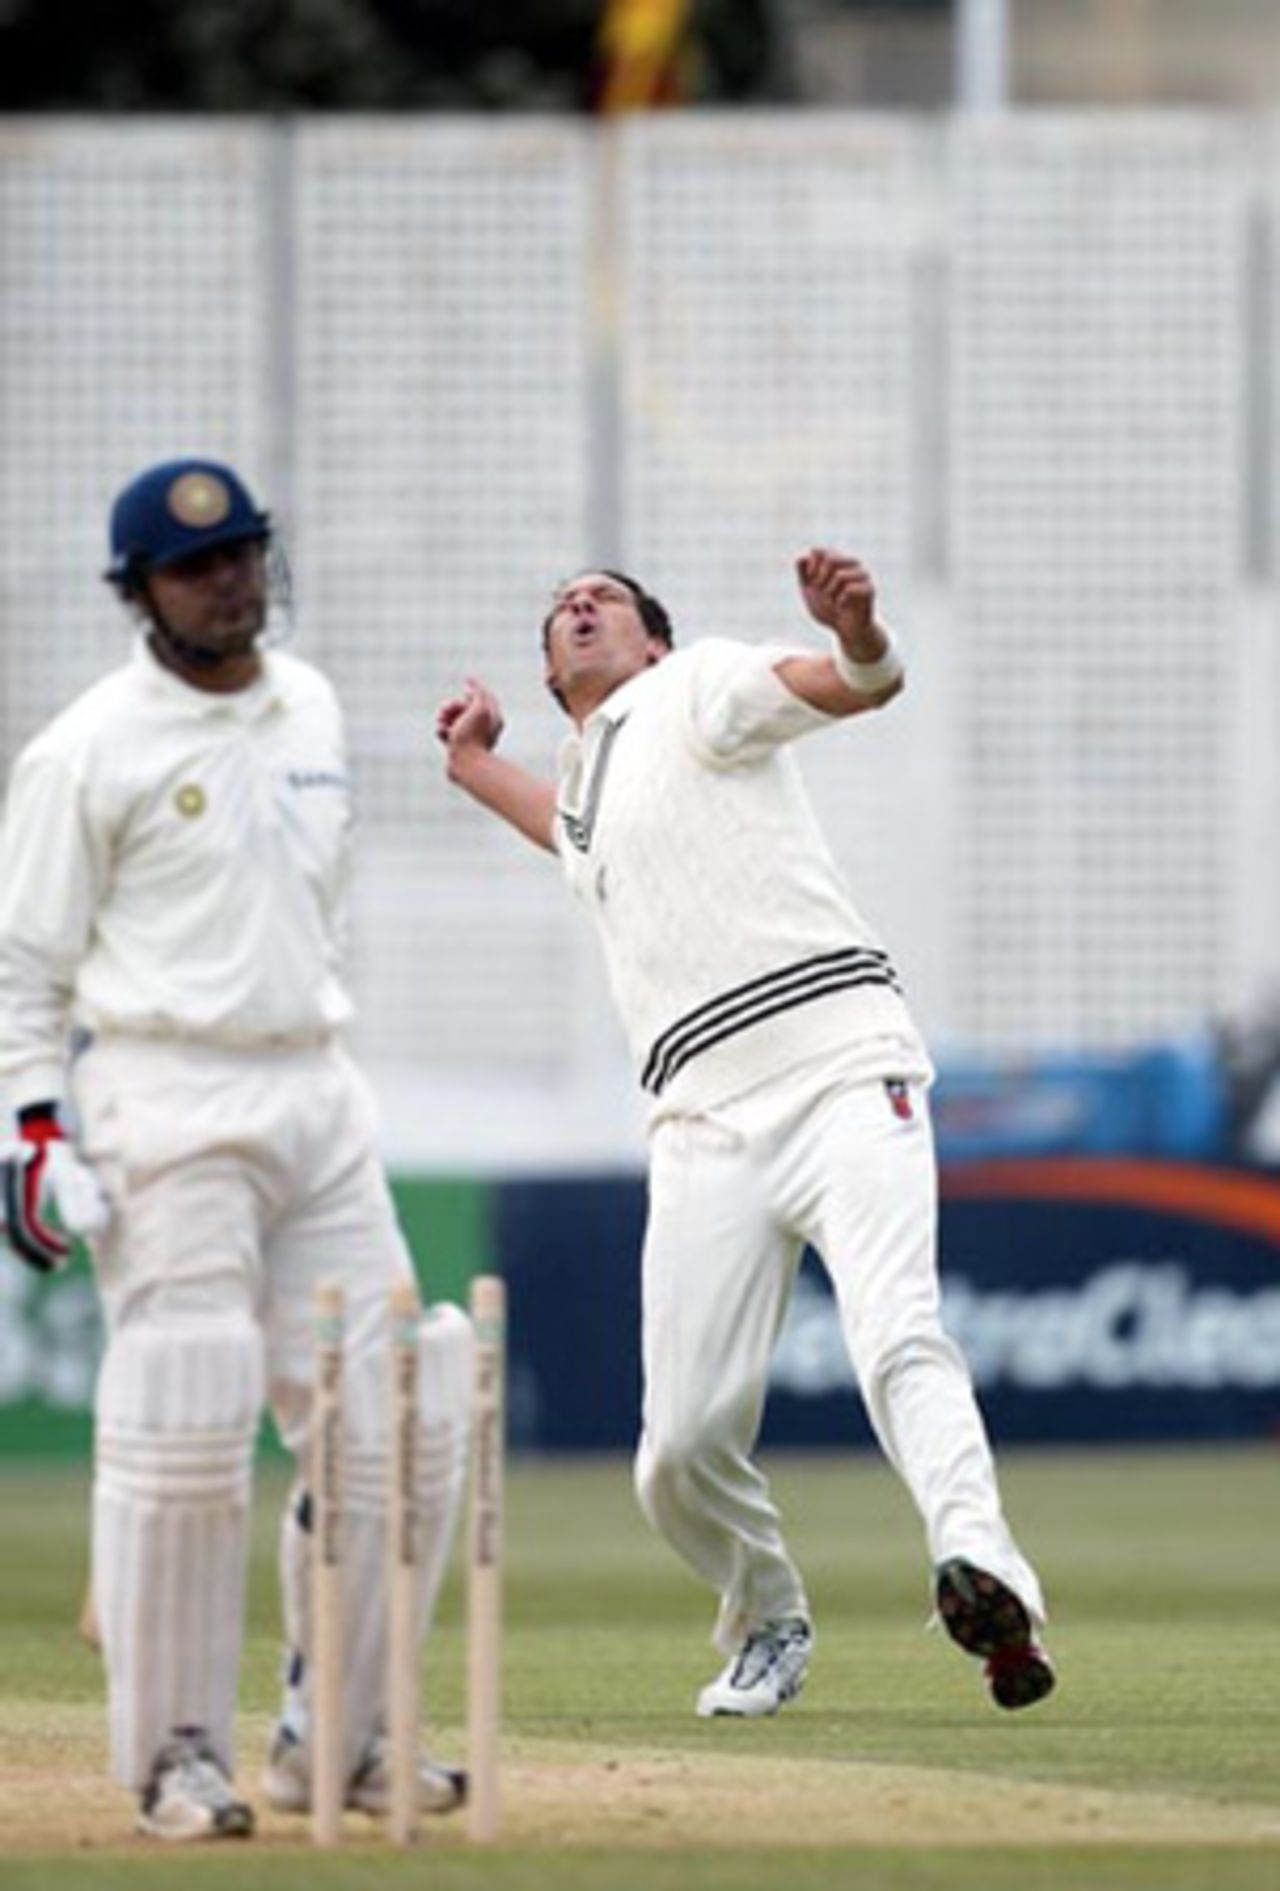 New Zealand bowler Daryl Tuffey celebrates the dismissal of Indian batsman Virender Sehwag, bowled for two. 1st Test: New Zealand v India at Basin Reserve, Wellington, 12-16 December 2002 (12 December 2002).